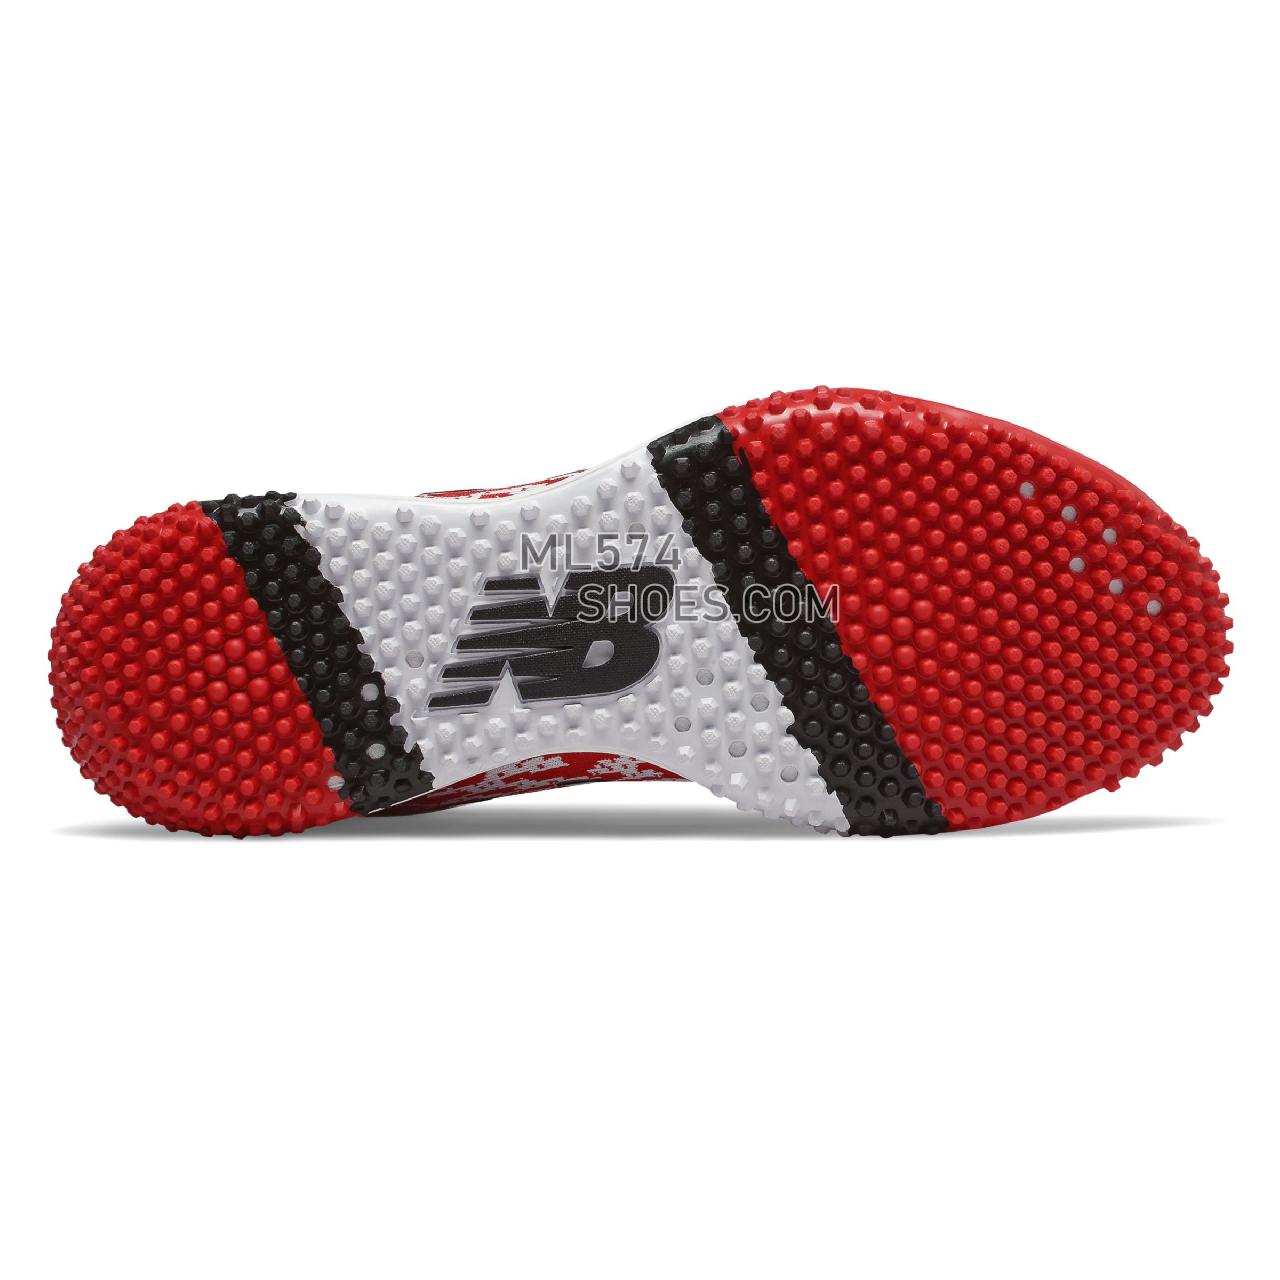 New Balance 4040v5 Turf - Men's Baseball Turf - Red with White - T4040TR5